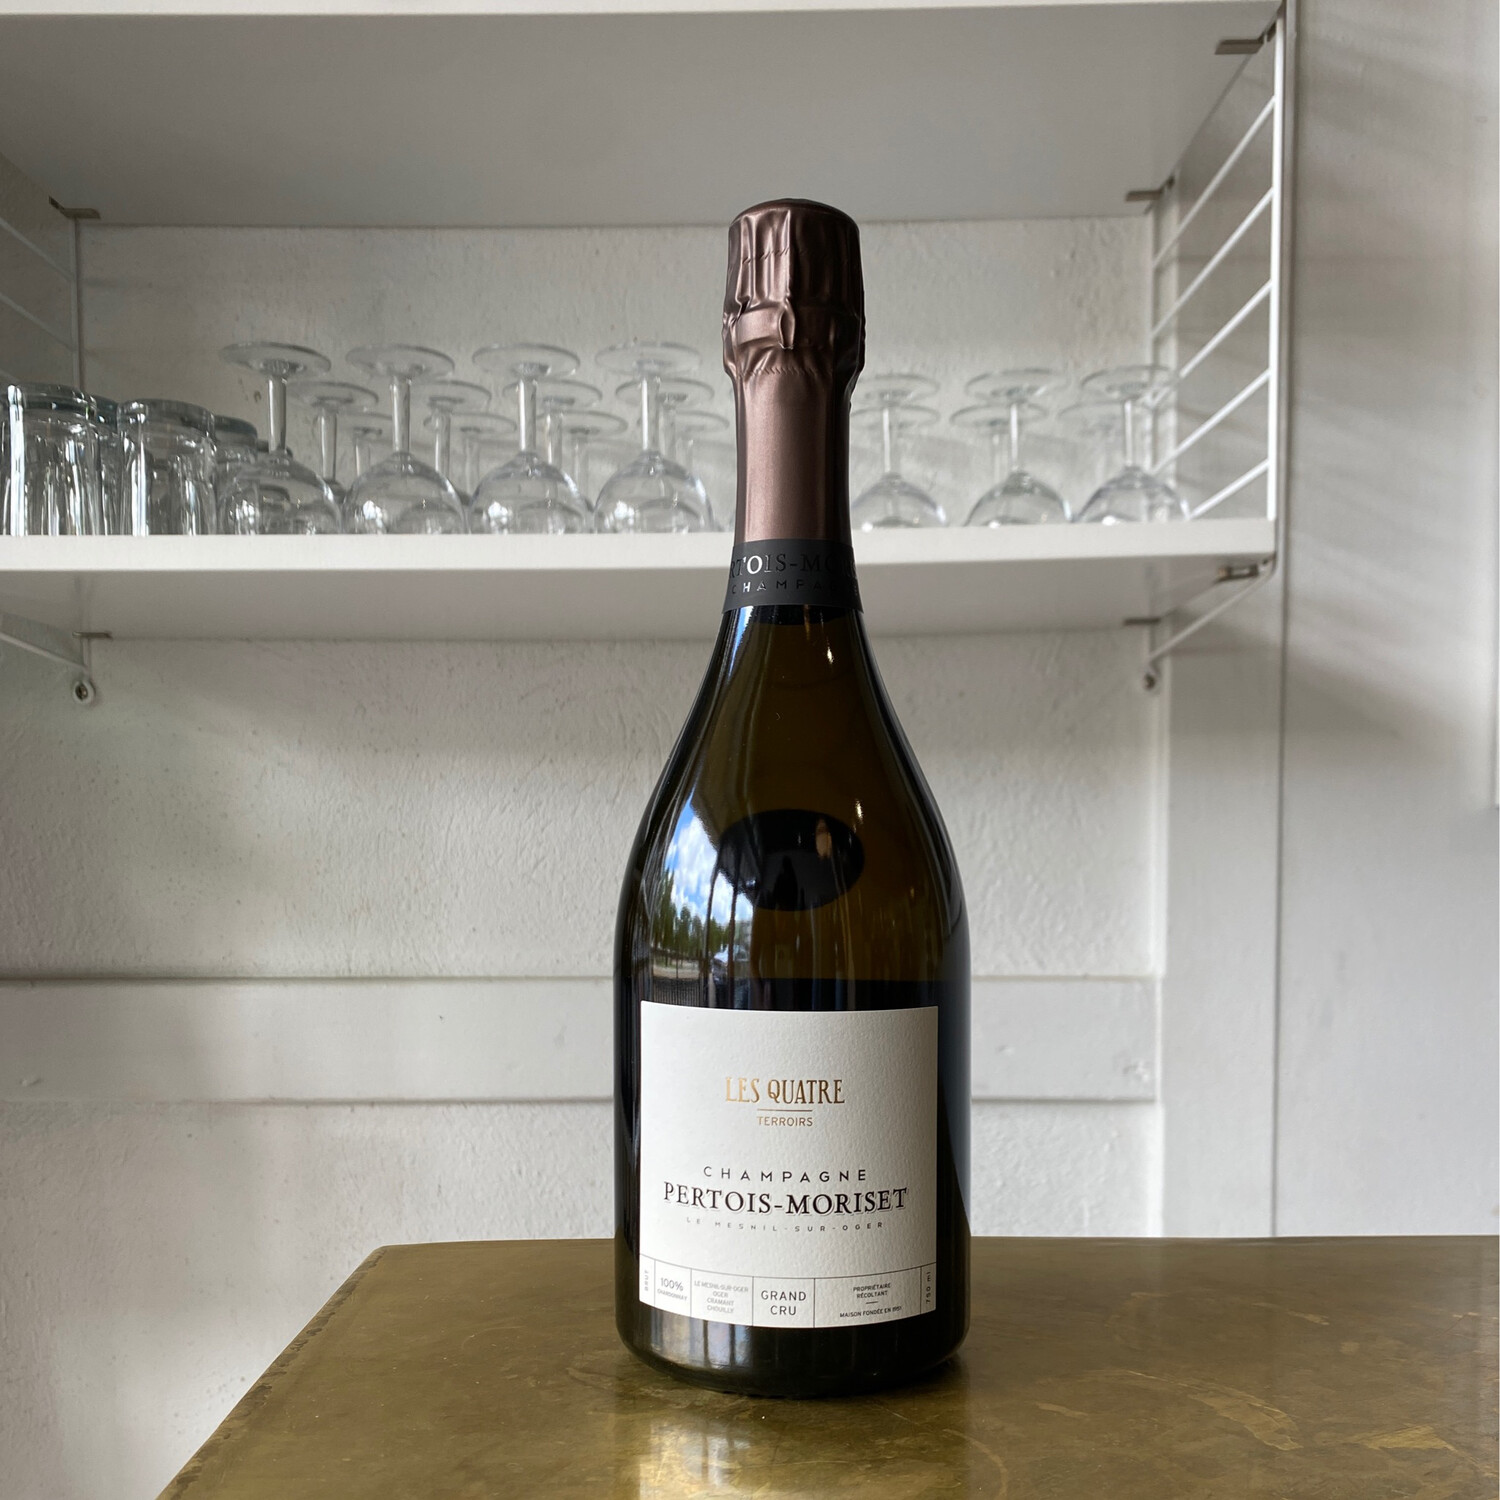 Champagne Pertois-Moriset, Les Quatre Terroirs Grand Cru (NV)